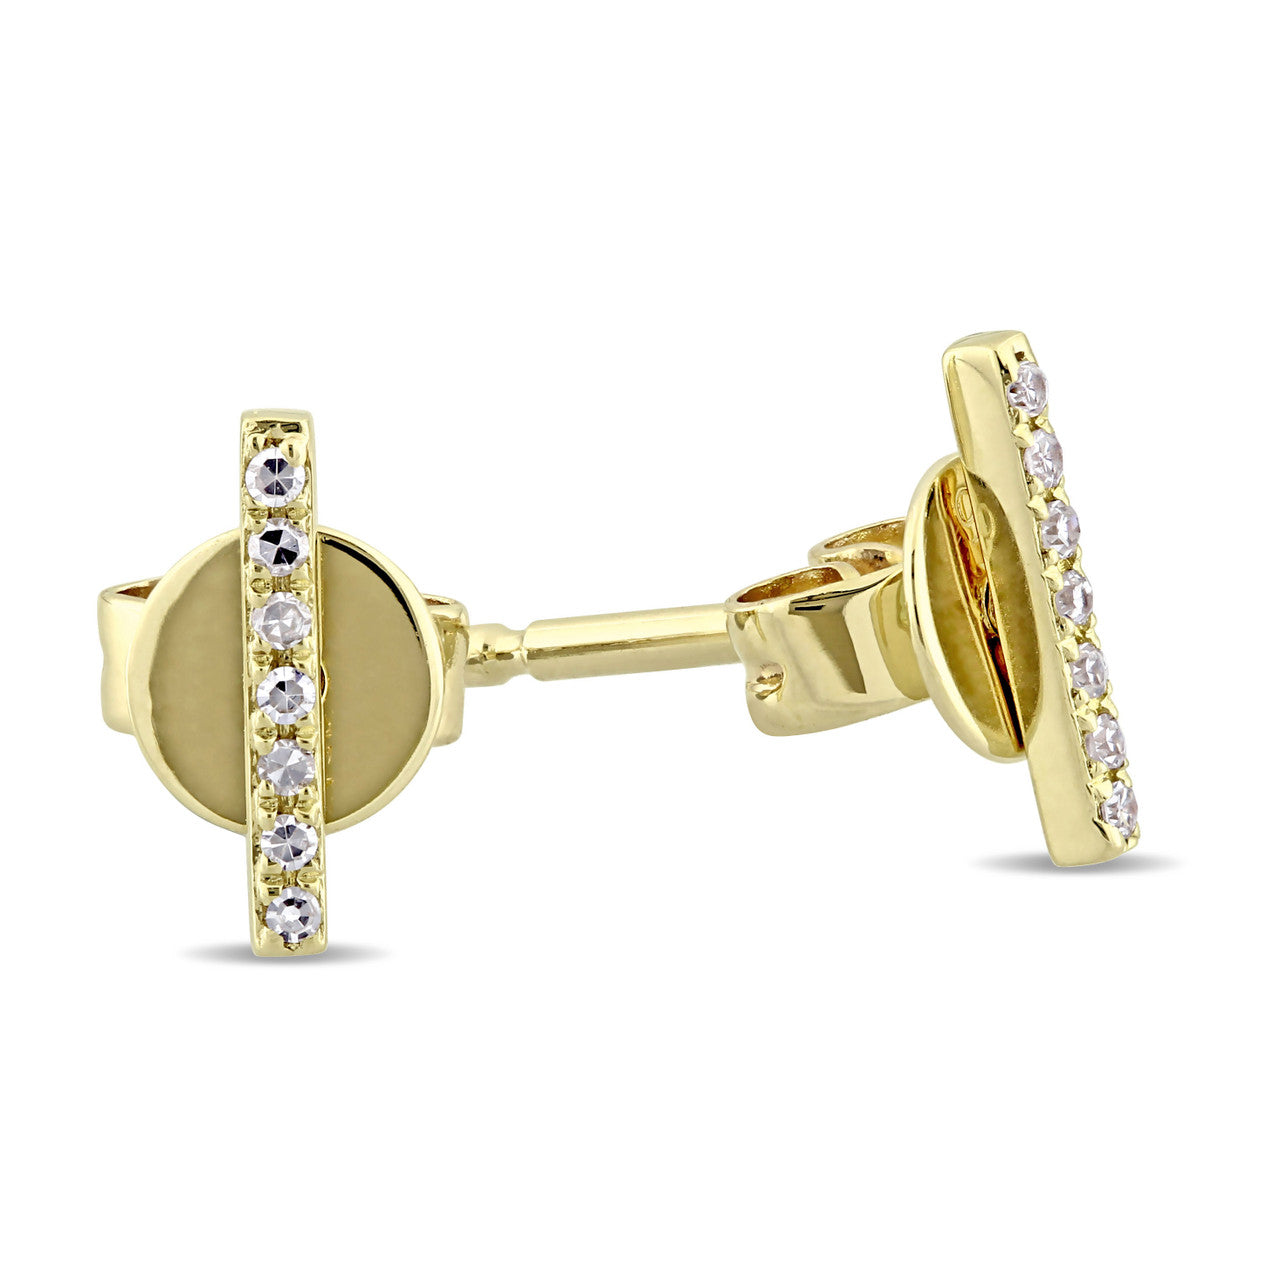 Ice Jewellery 0.05 CT Diamond Bar Stud Earrings in 14k Yellow Gold - 75000005658 | Ice Jewellery Australia